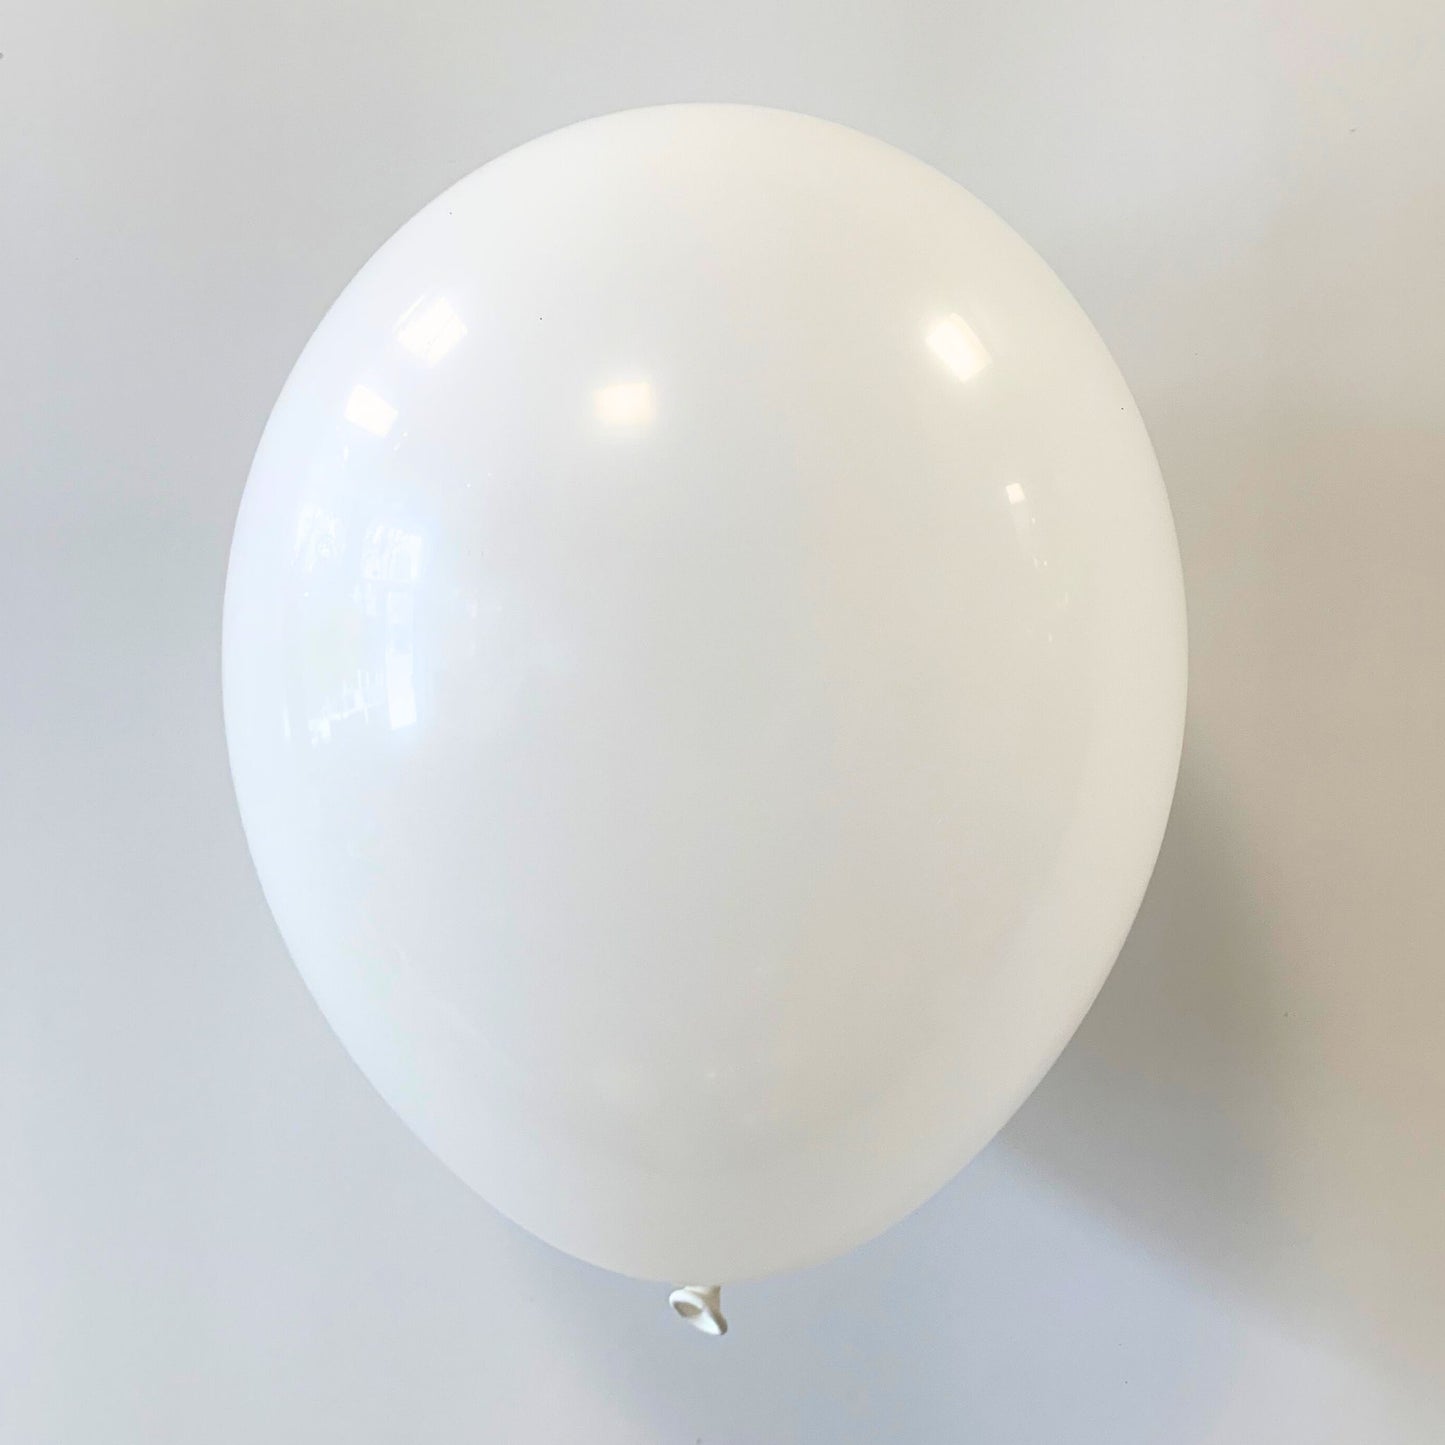 11 inch helium filled White latex balloon